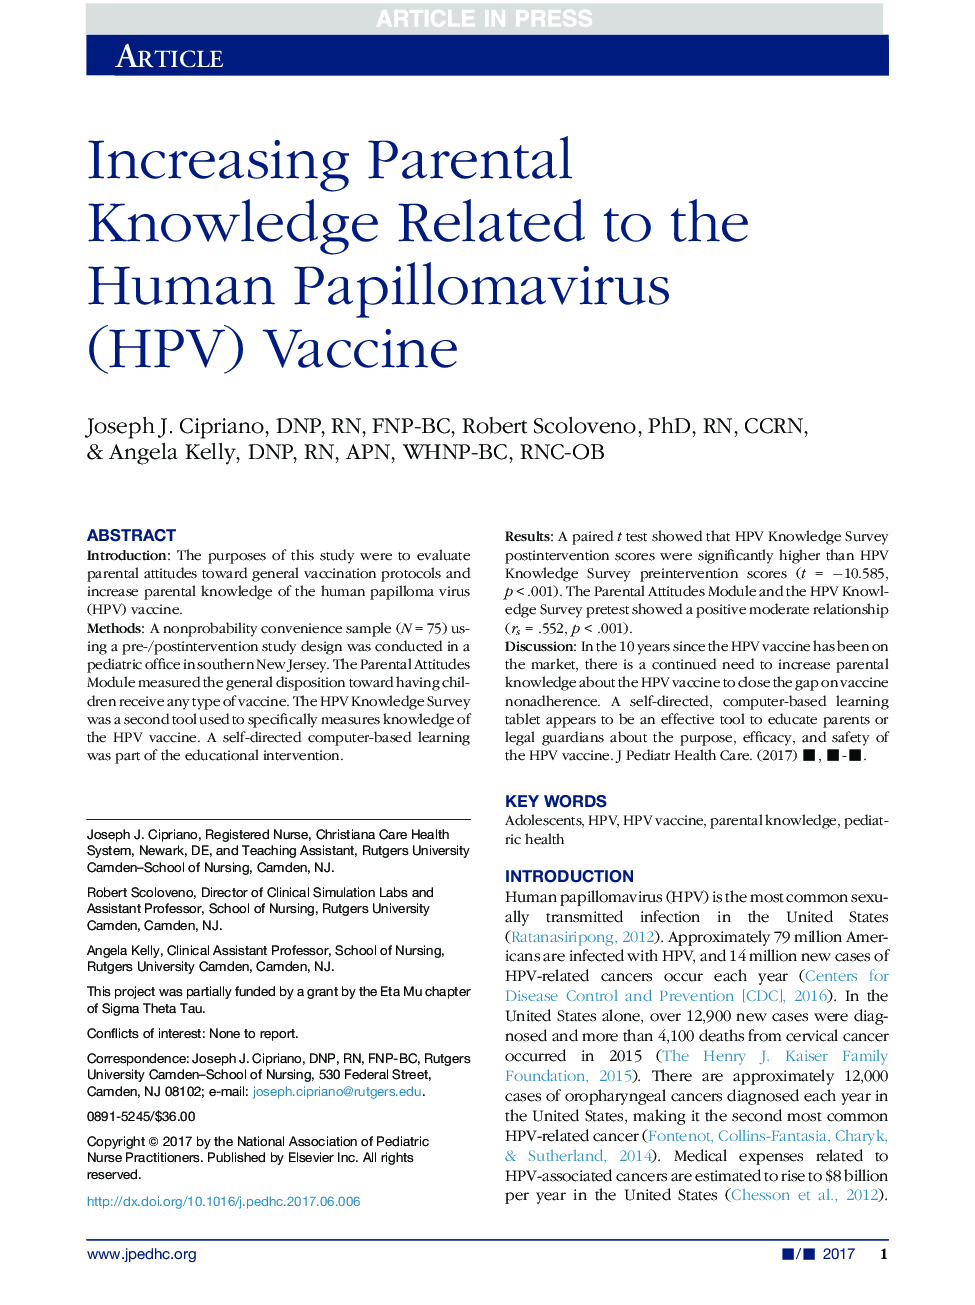 Increasing Parental Knowledge Related to the Human Papillomavirus (HPV) Vaccine